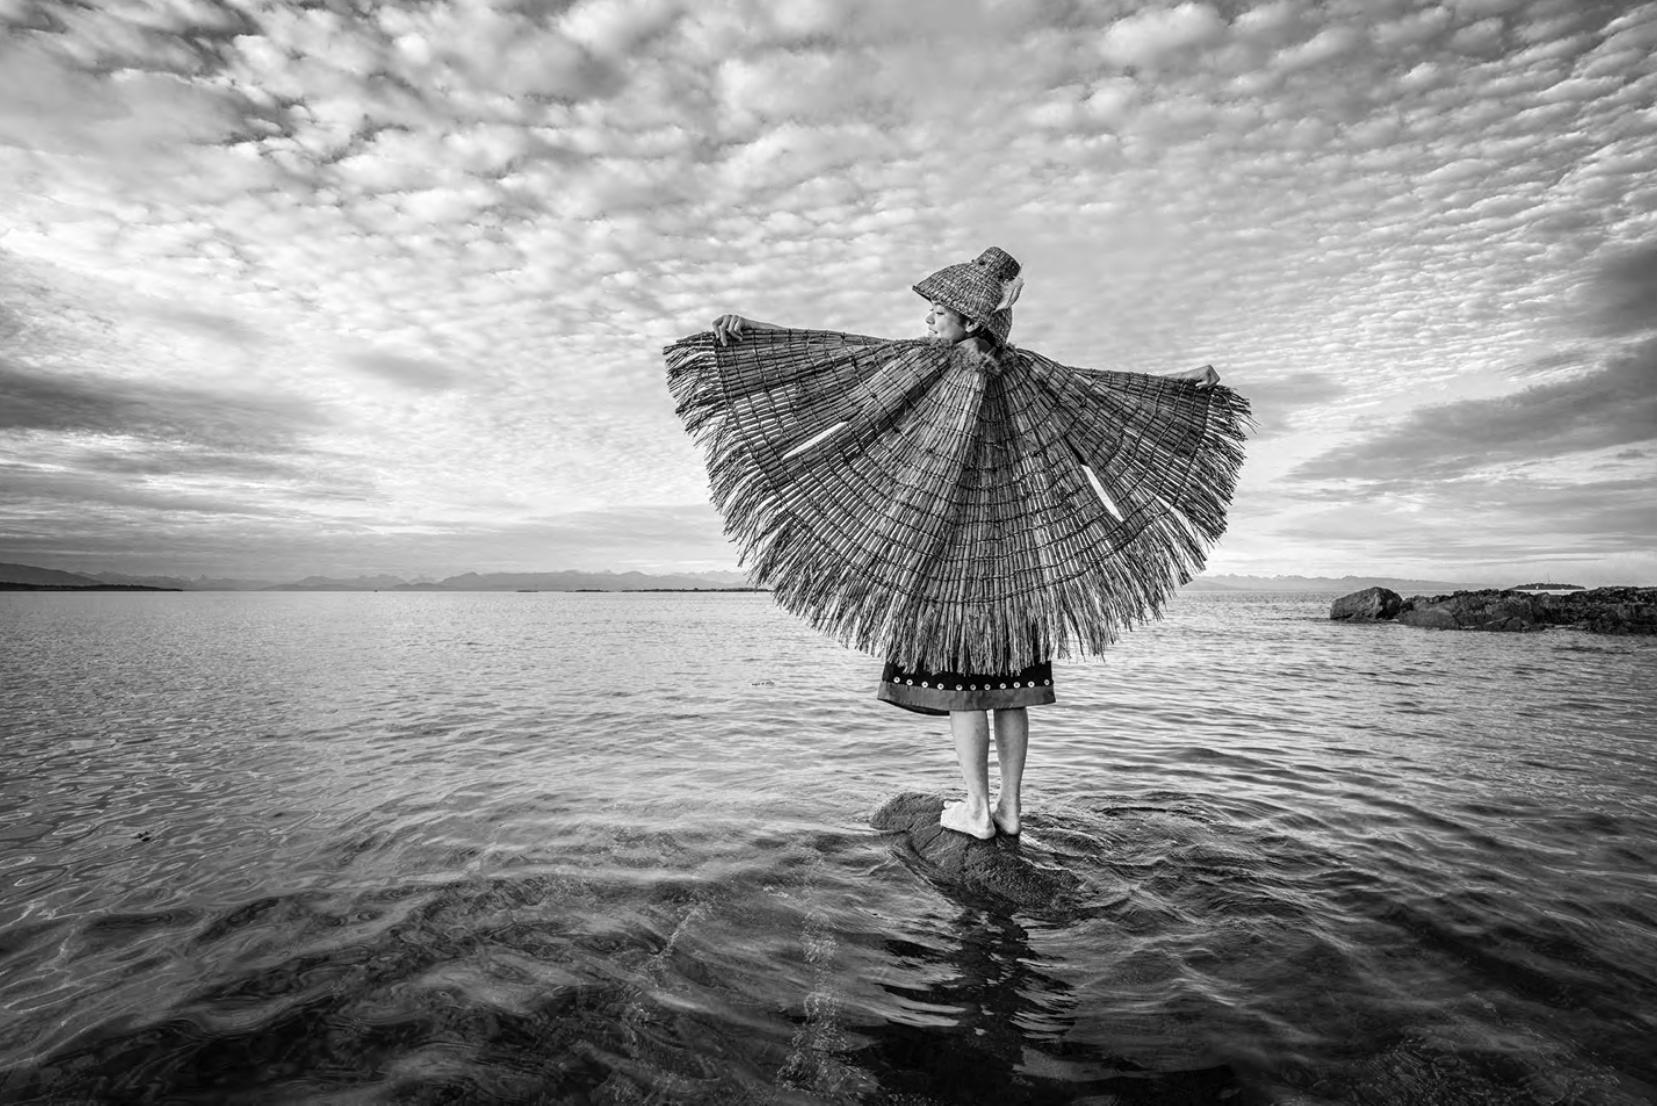 Cristina Mittermeier Black and White Photograph – Mit offenen Armen 